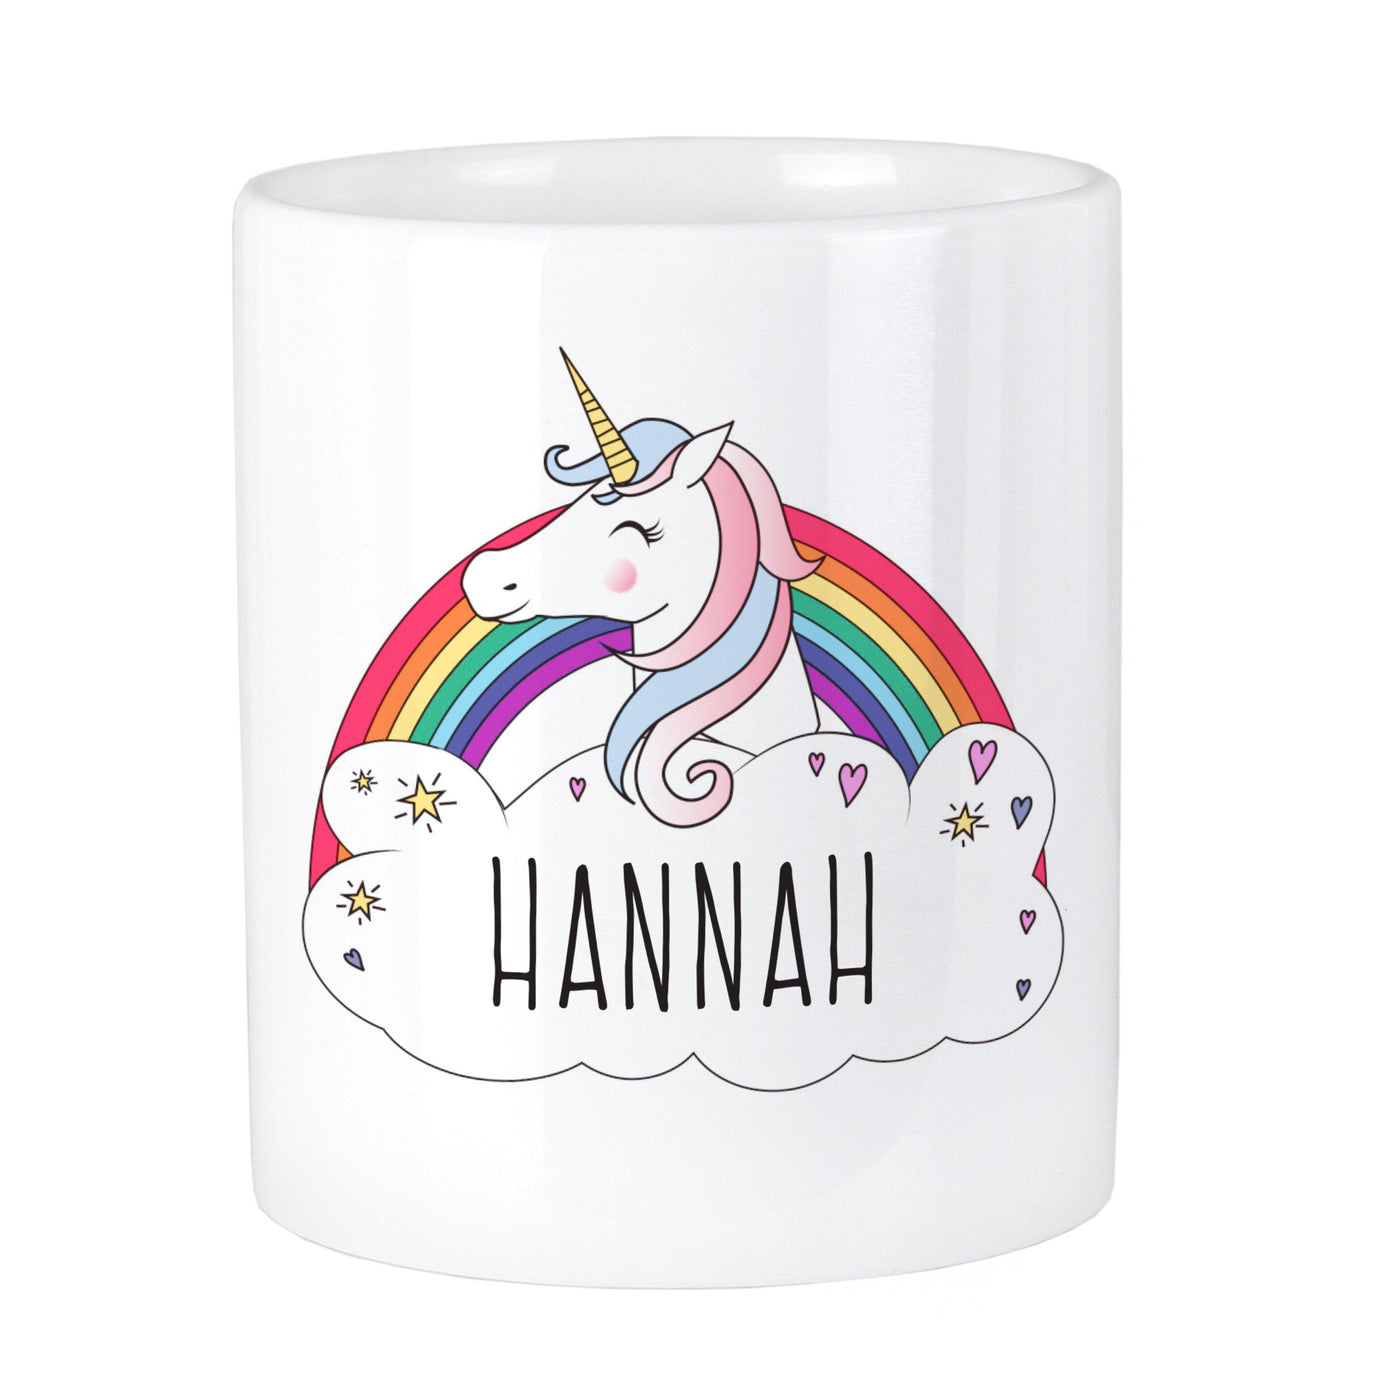 Personalised Unicorn Ceramic Storage Pot - Shop Personalised Gifts